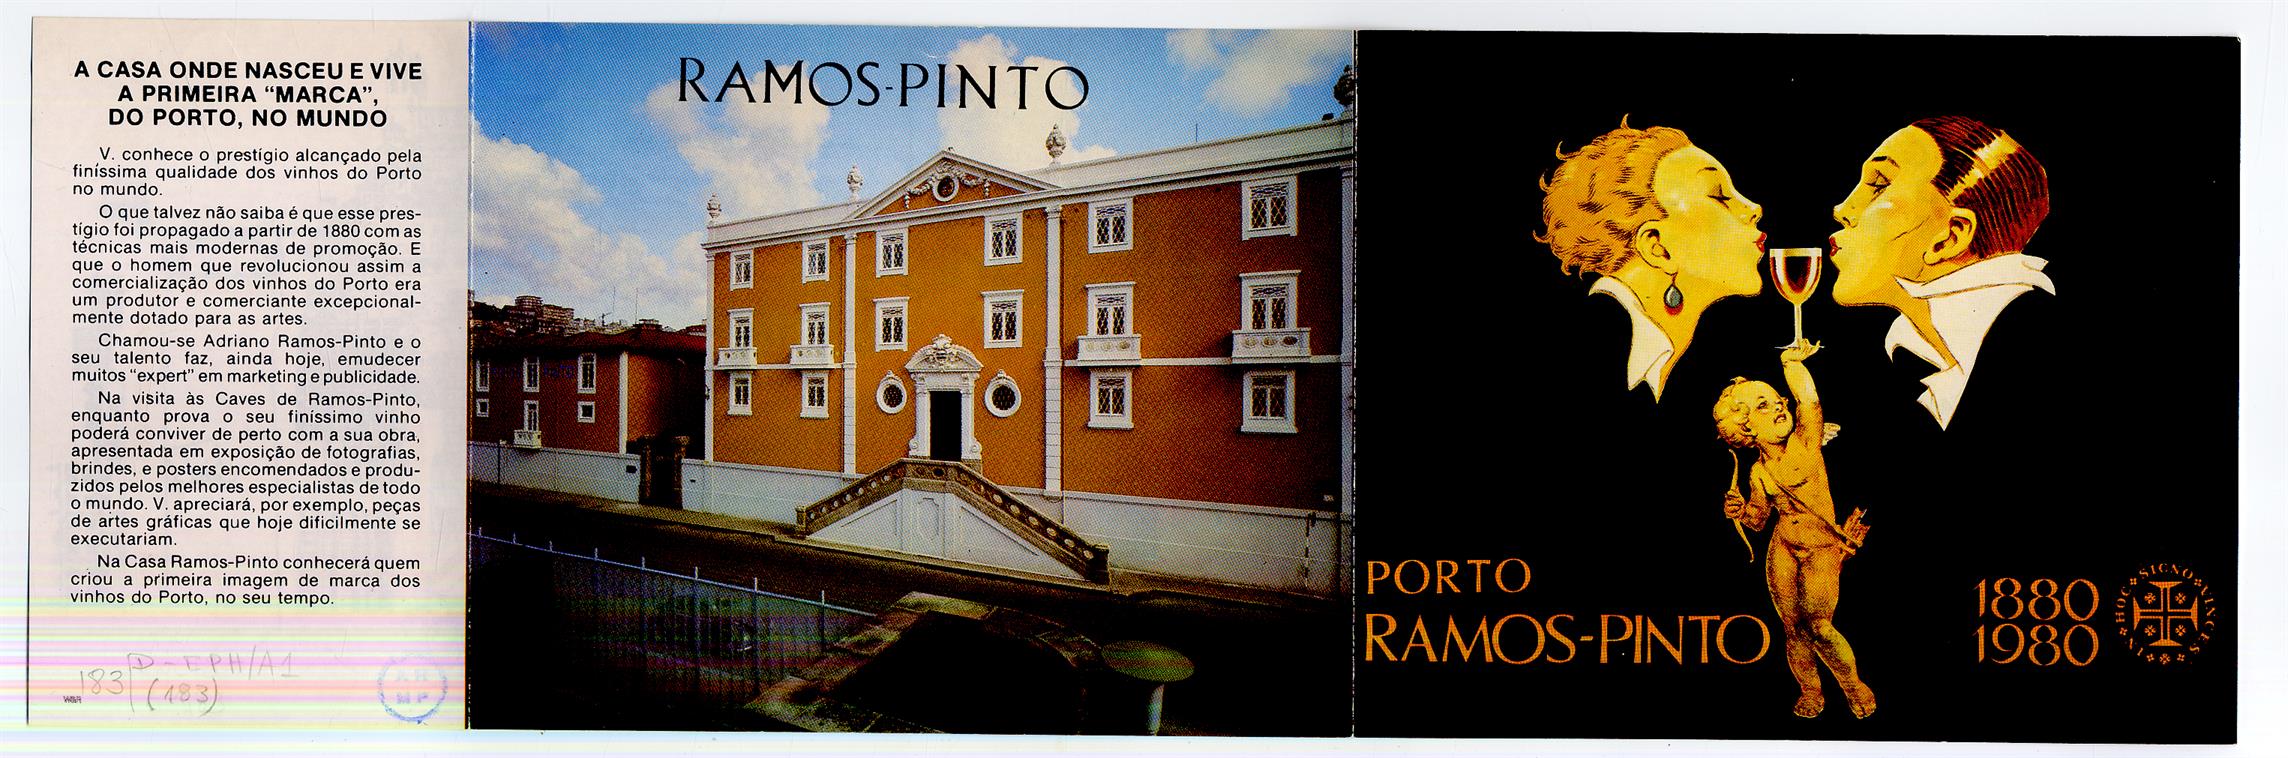 Porto Ramos Pinto : 1880-1980